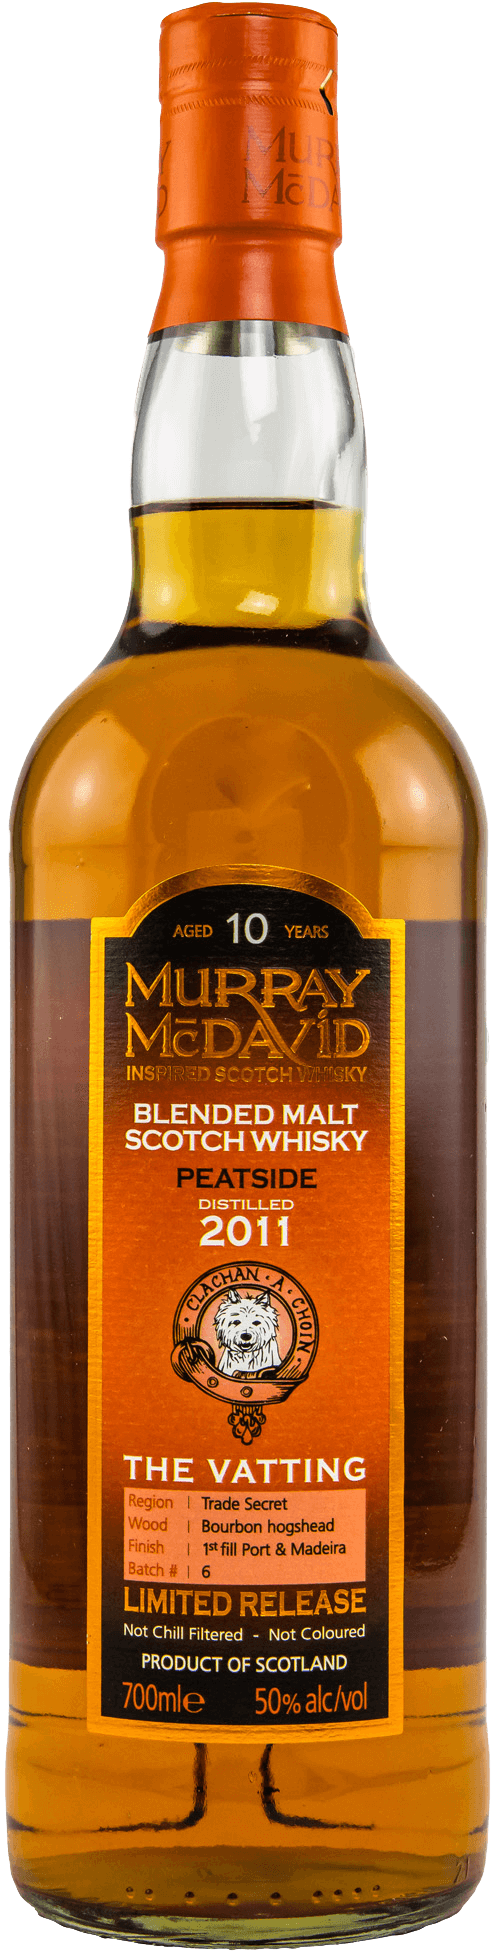 Murray McDavid 10 Jahre 2011 Peatside Port & Madeira Cask Batch 6 Whisky 50%